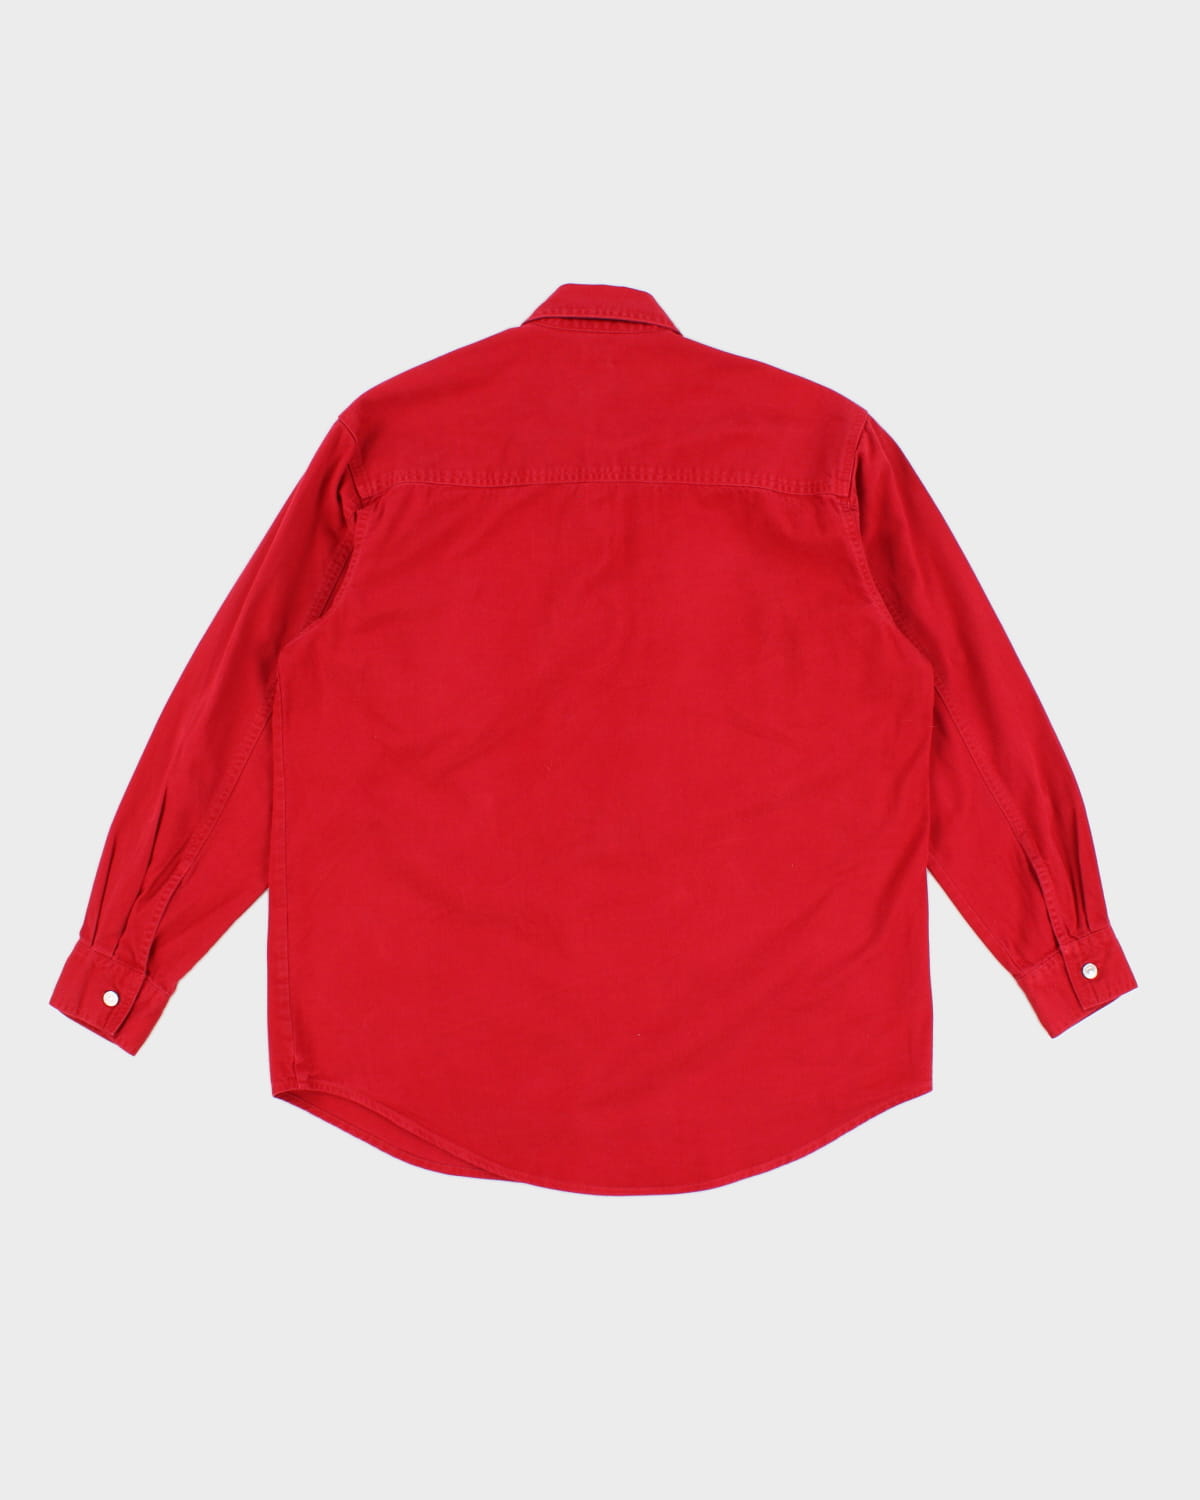 Levi's Red Denim Shirt - S